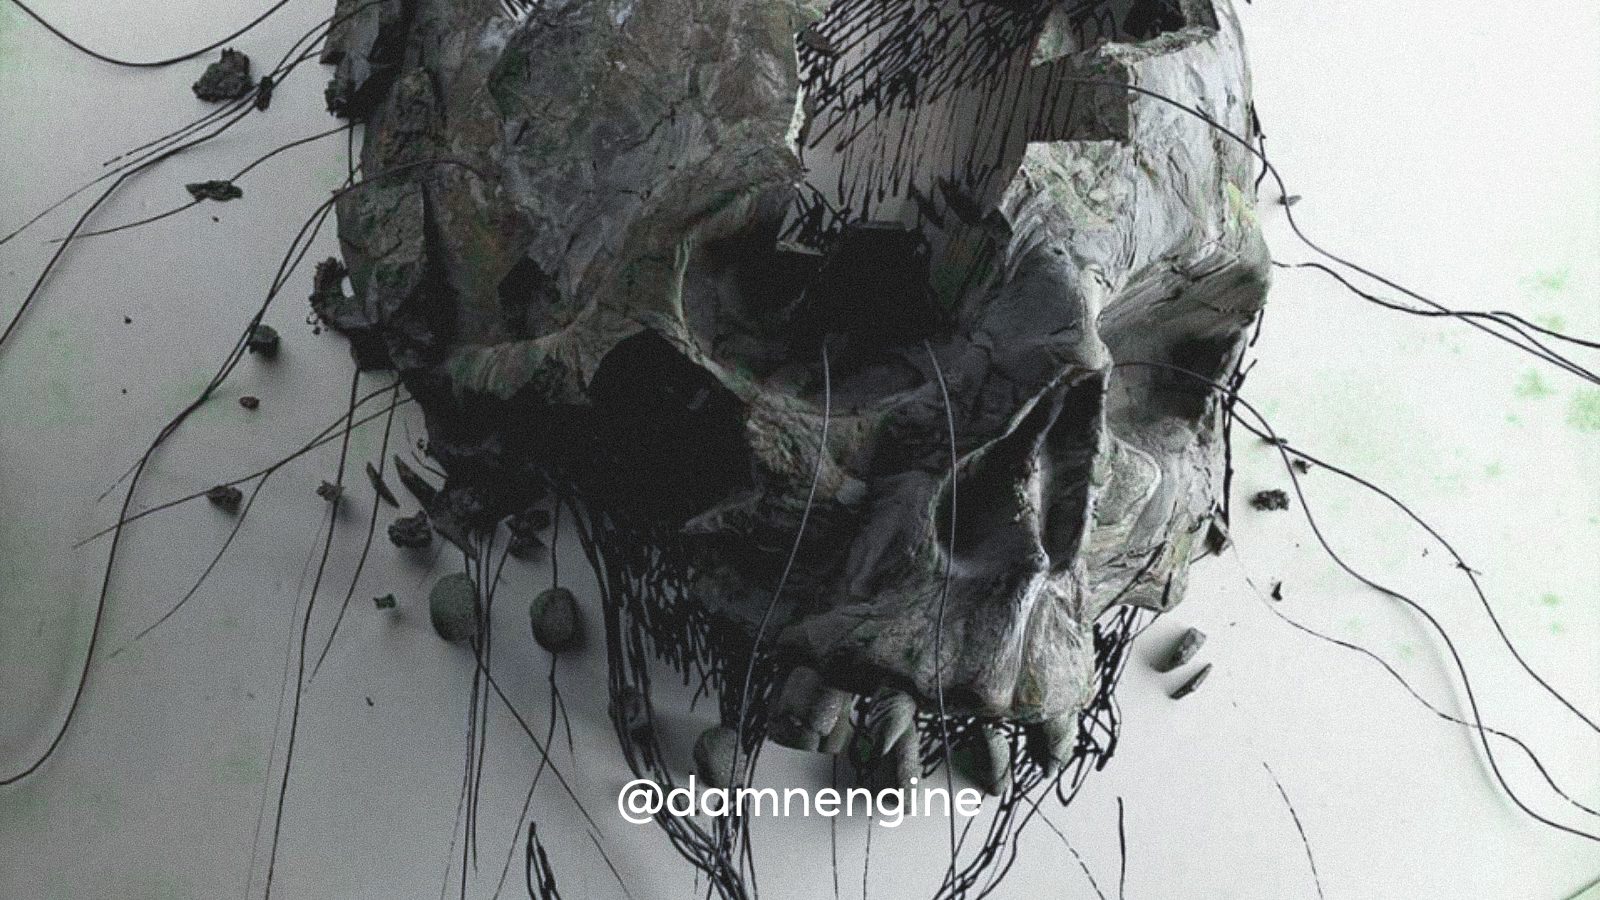 An art installation of a skull depicting pain.